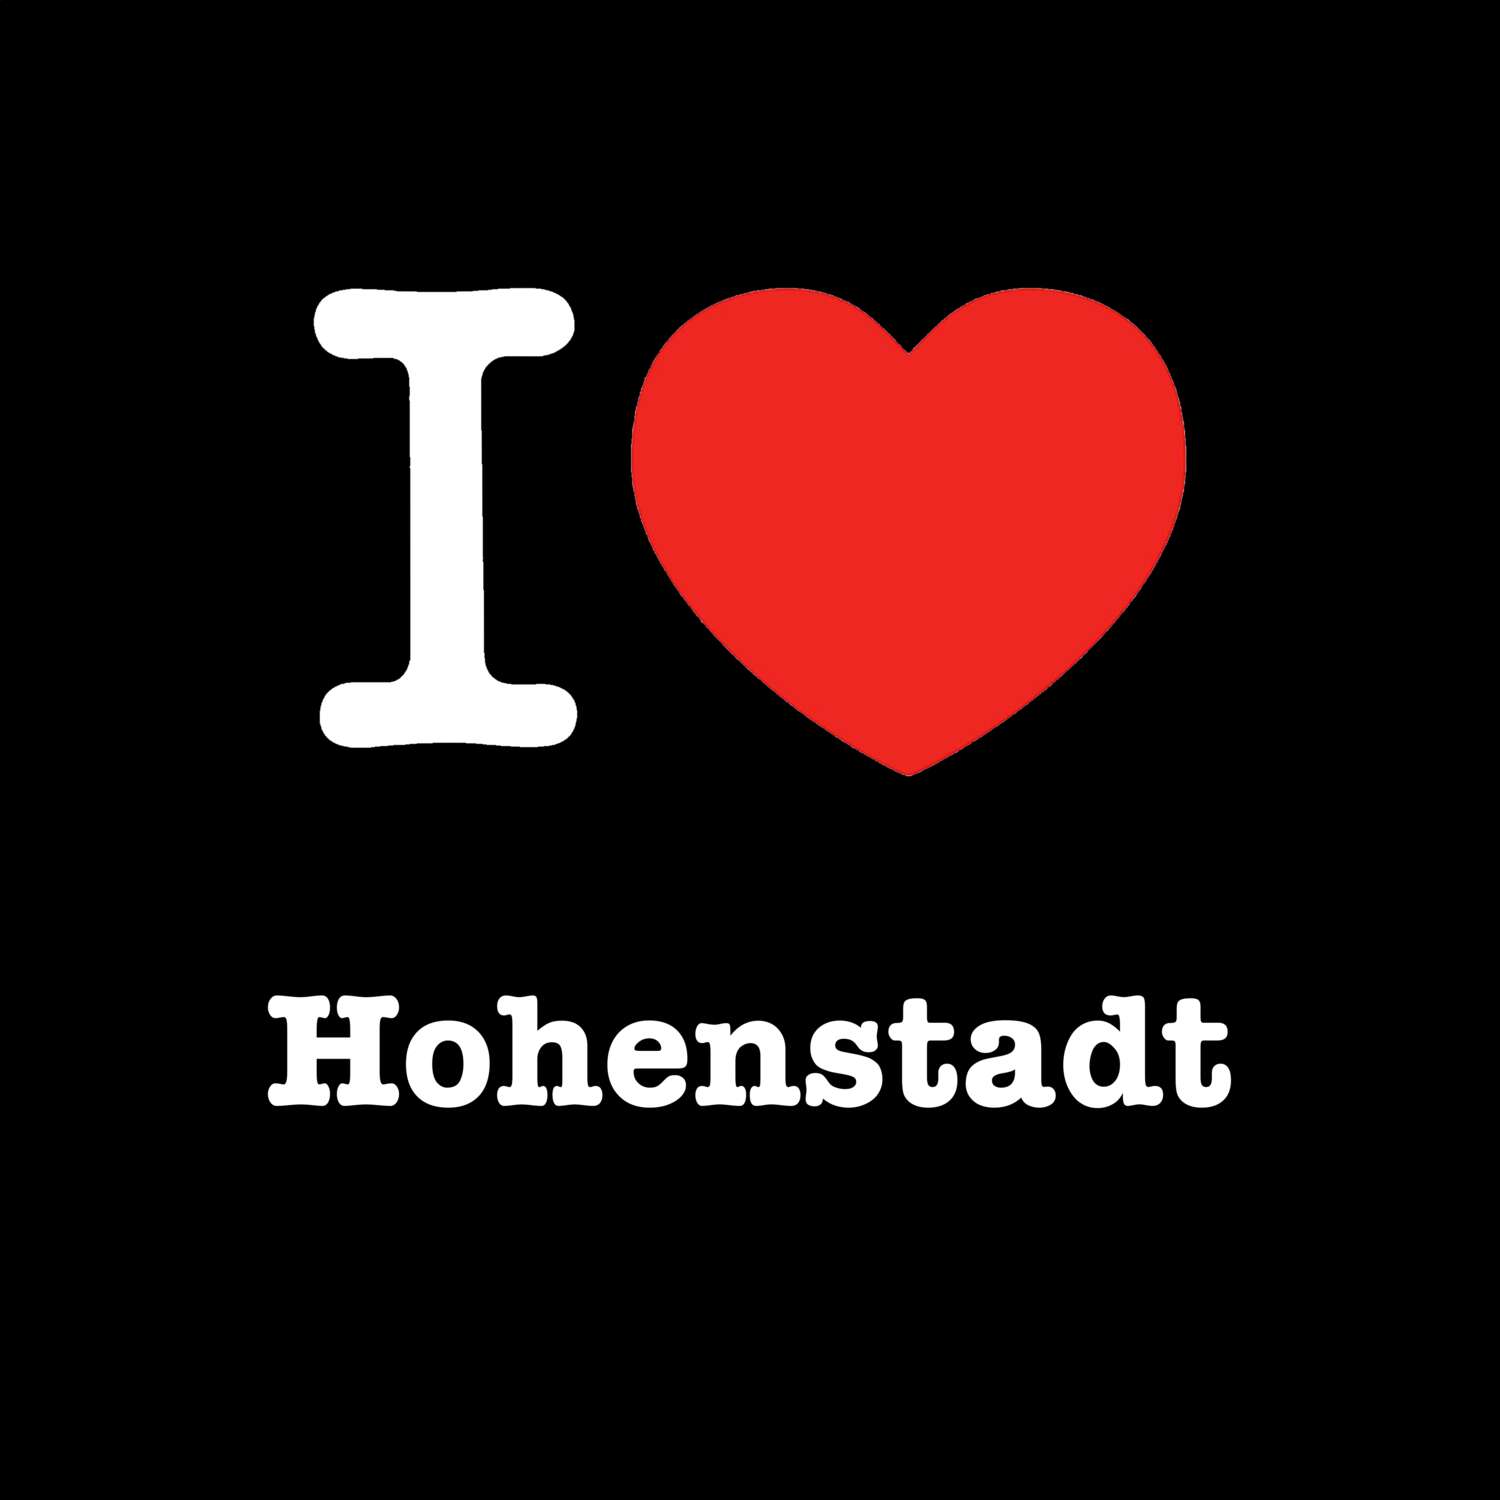 Hohenstadt T-Shirt »I love«